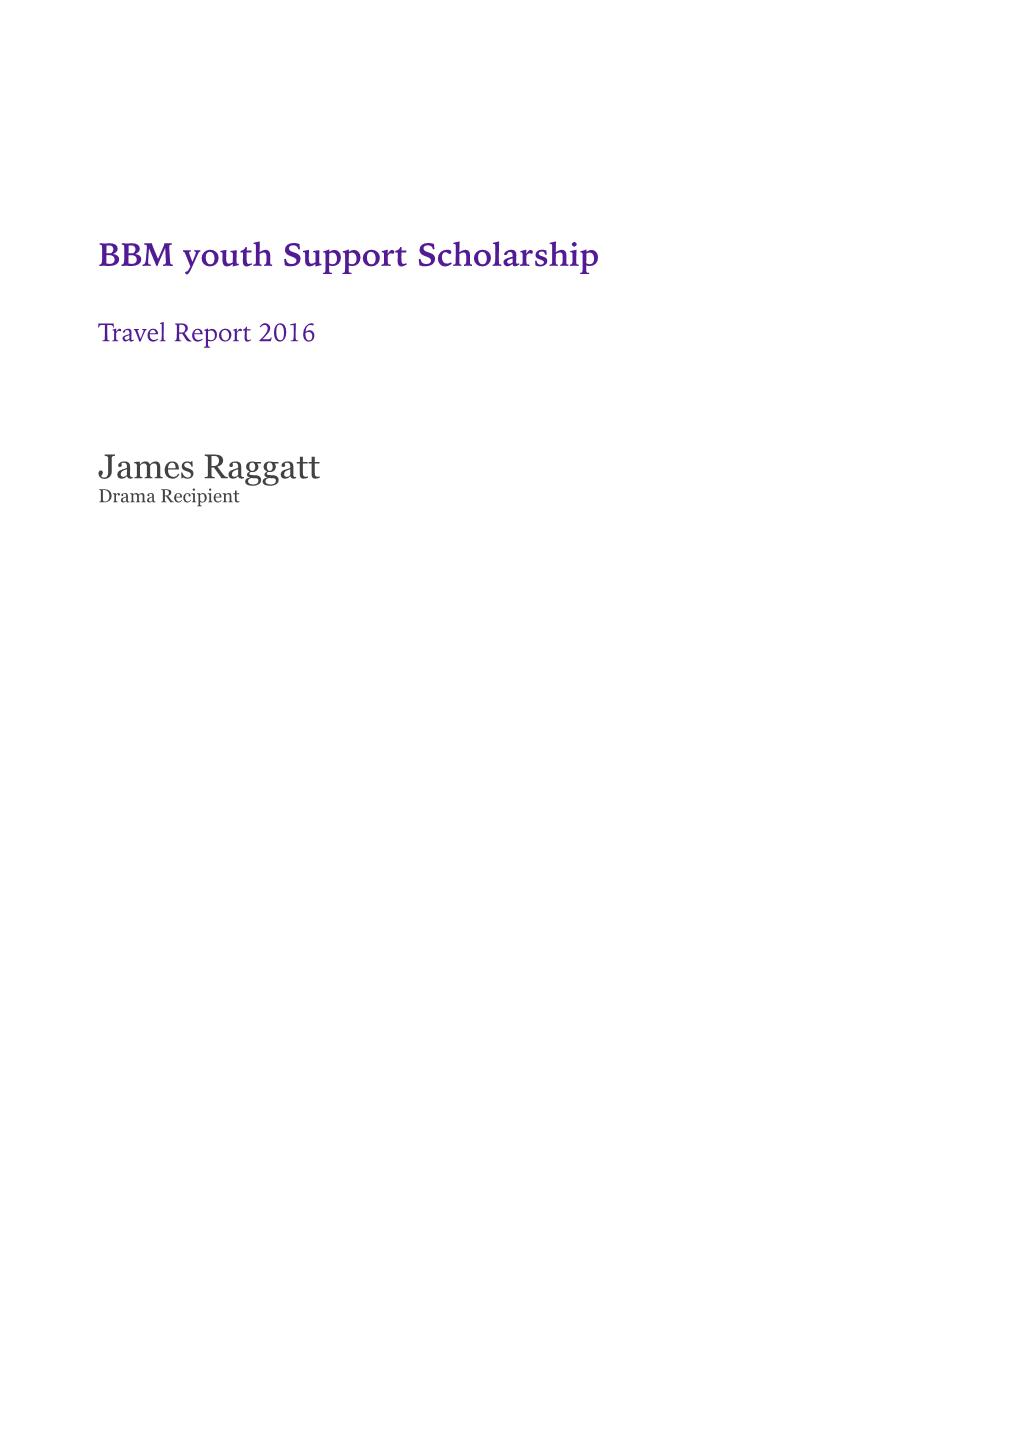 BBM Scholarship Report, James Raggatt.Pages